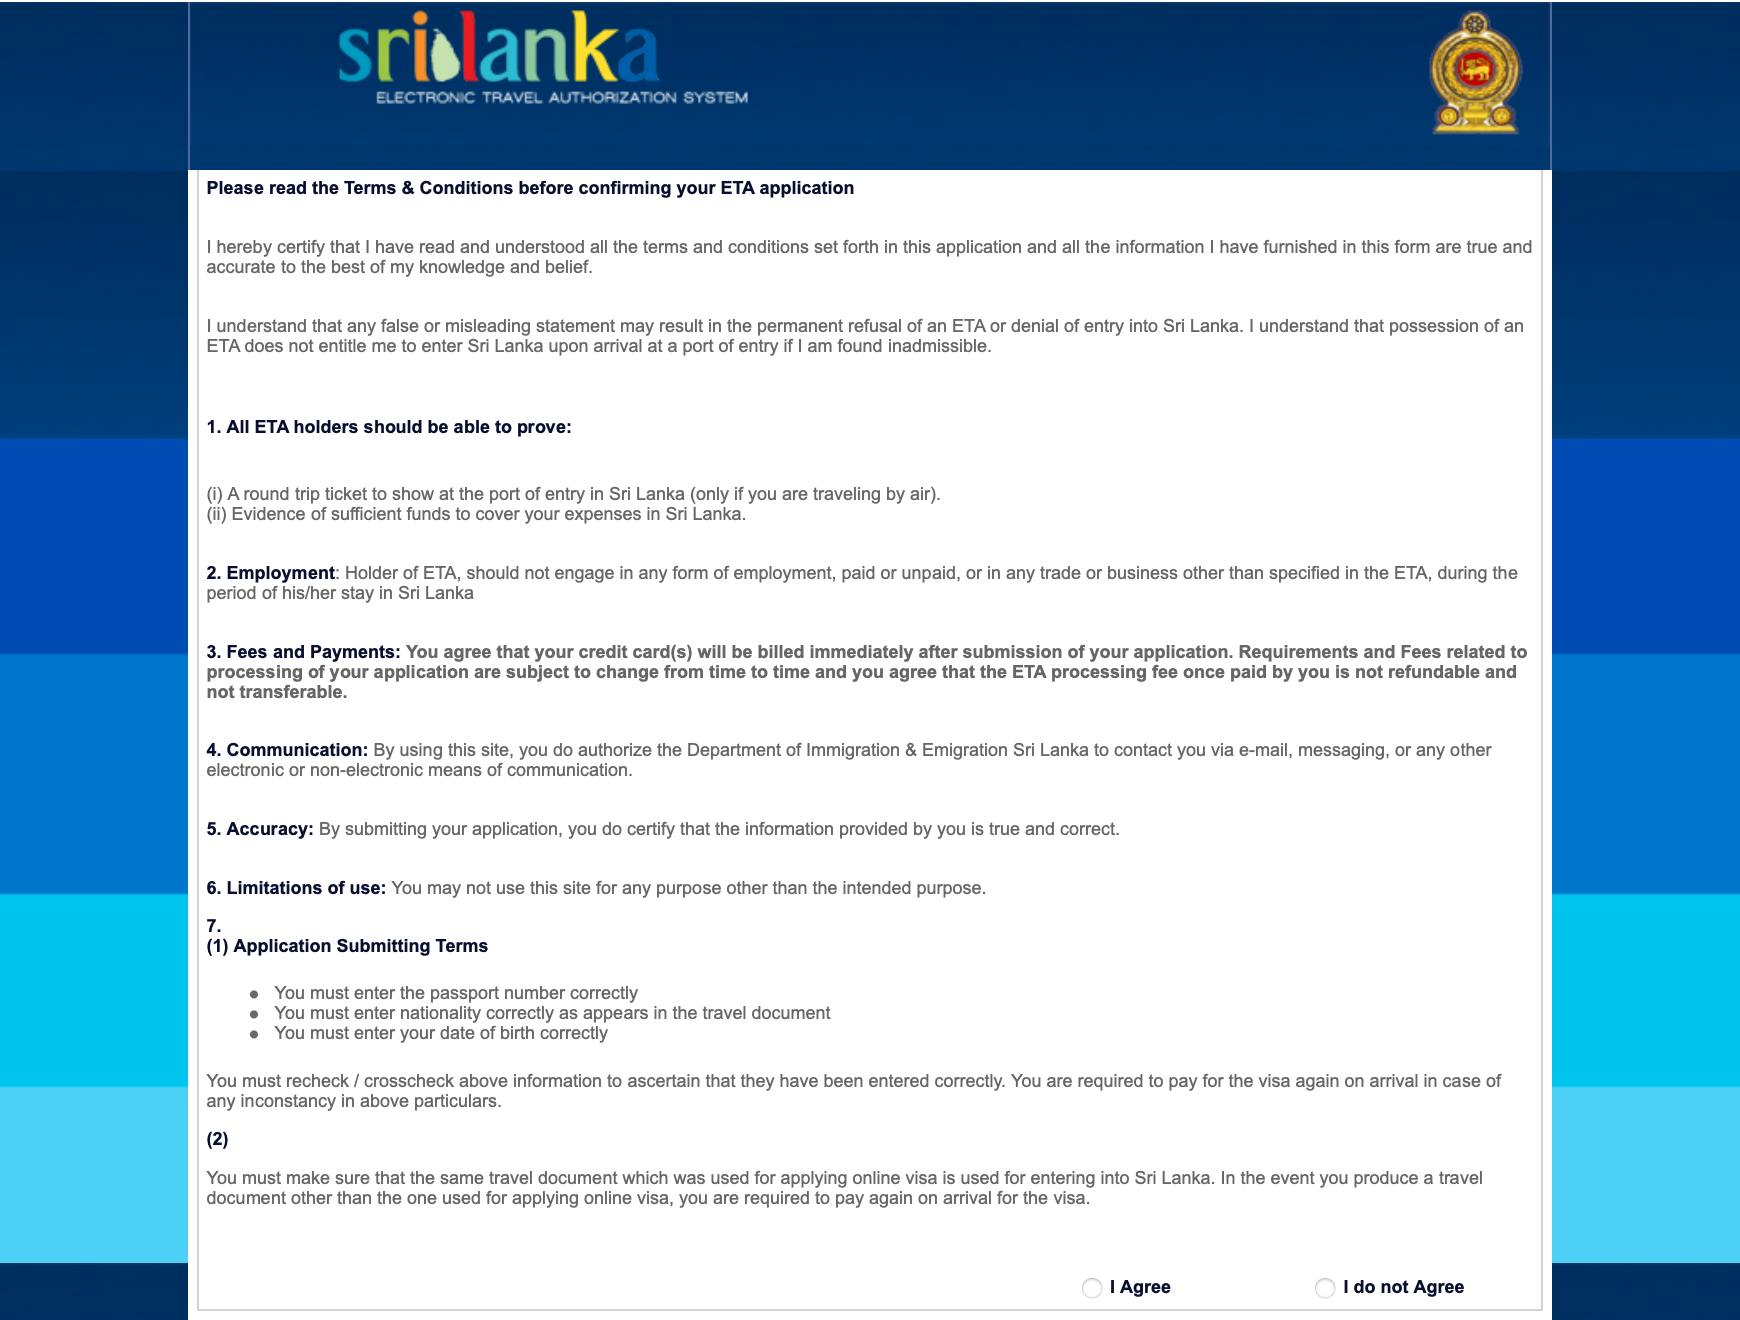 Apply on the Sri lanka electronic travel authorization system